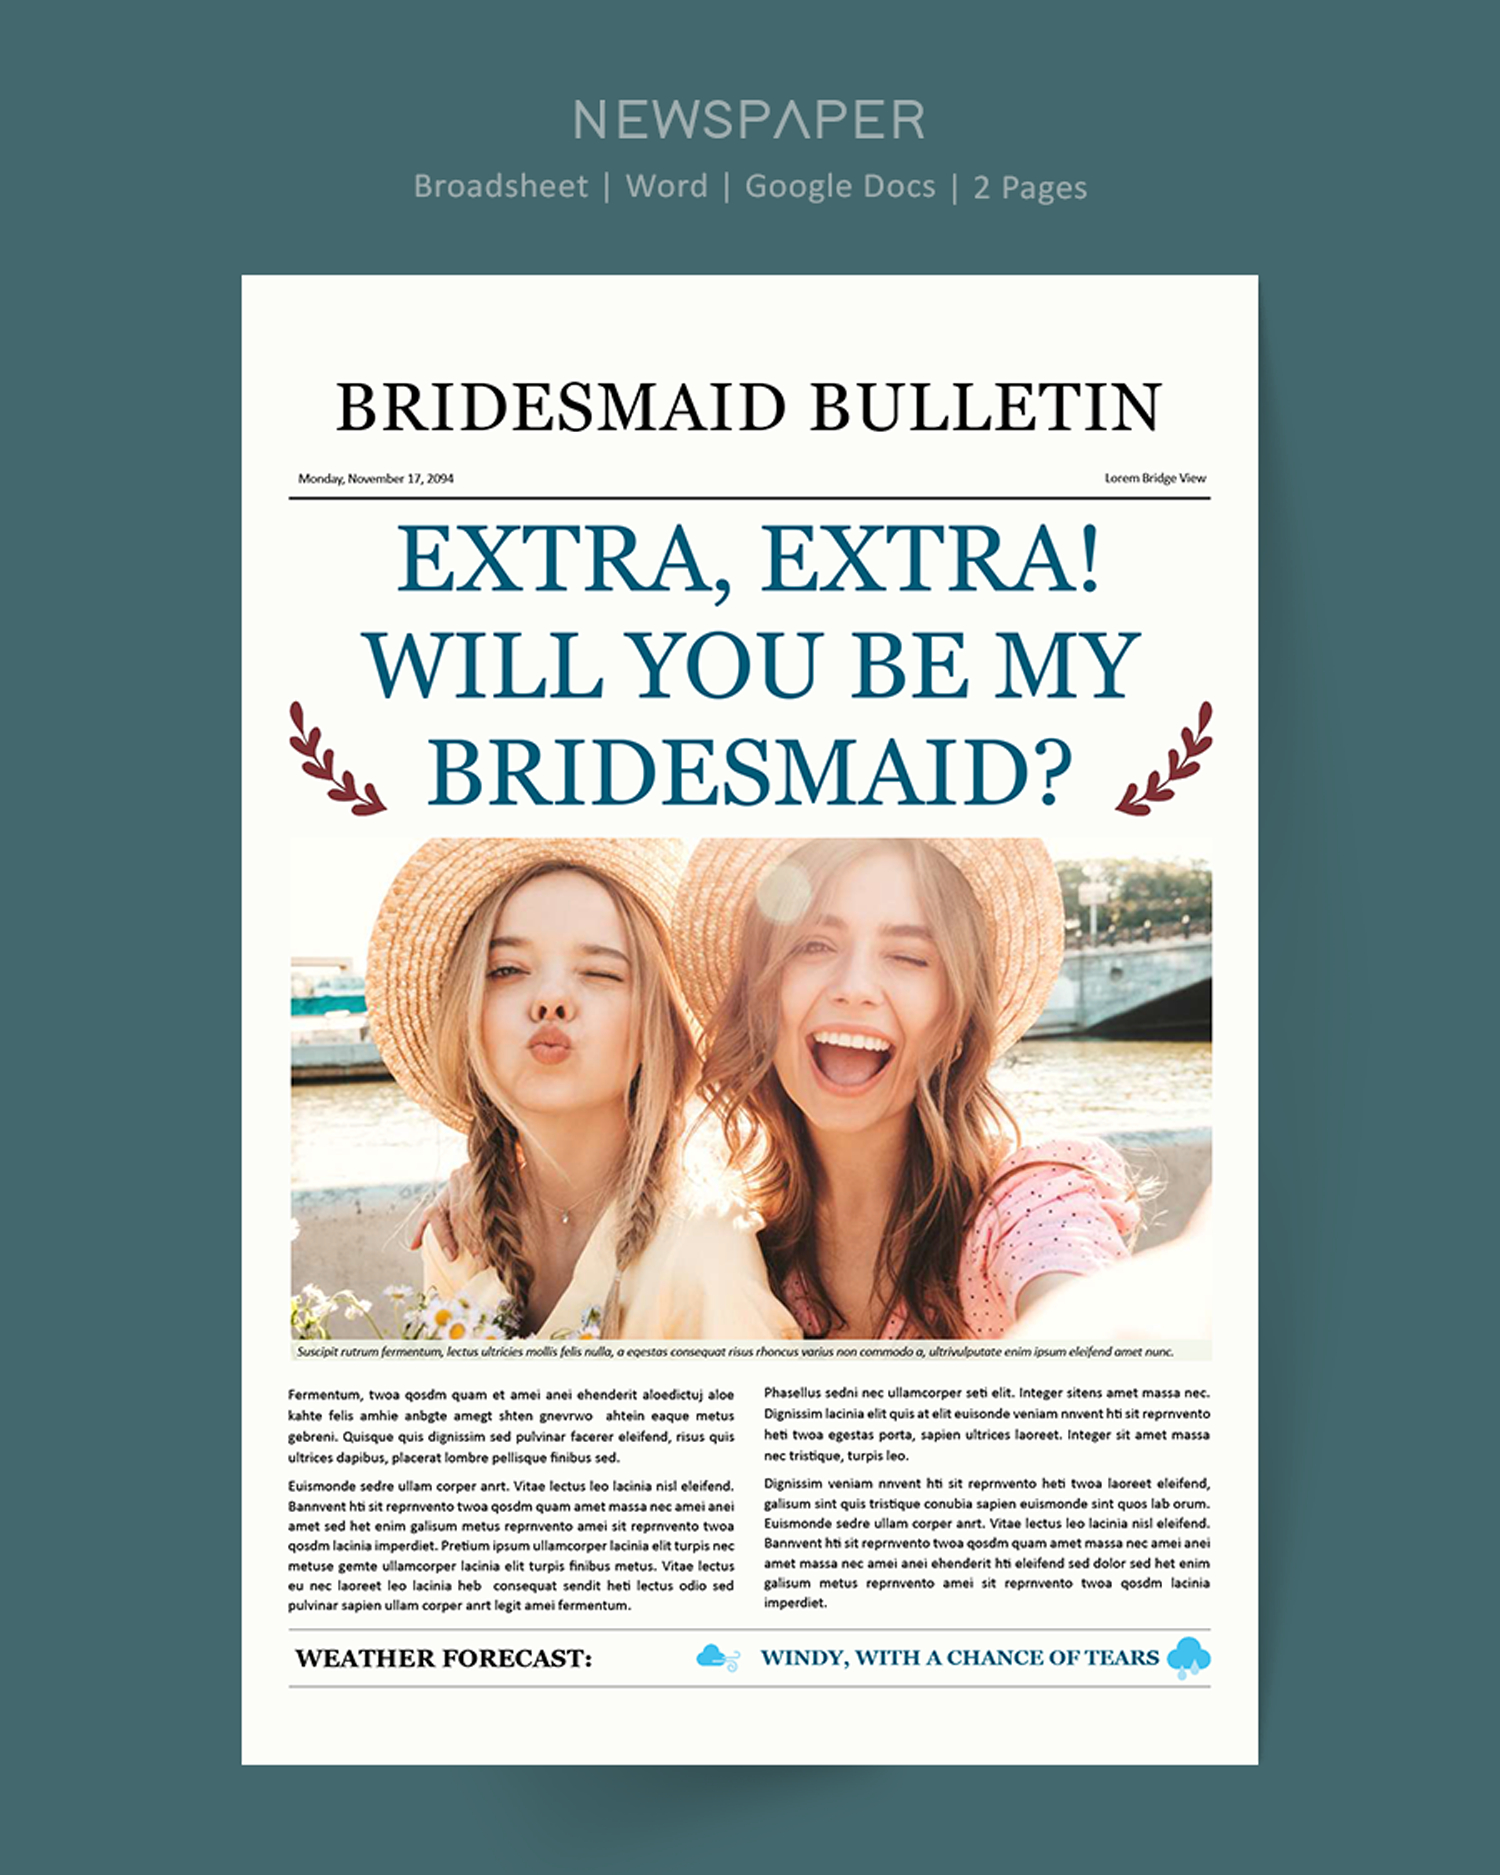 Bridesmaid Bulletin Proposal Newspaper Template - Word, Google Docs